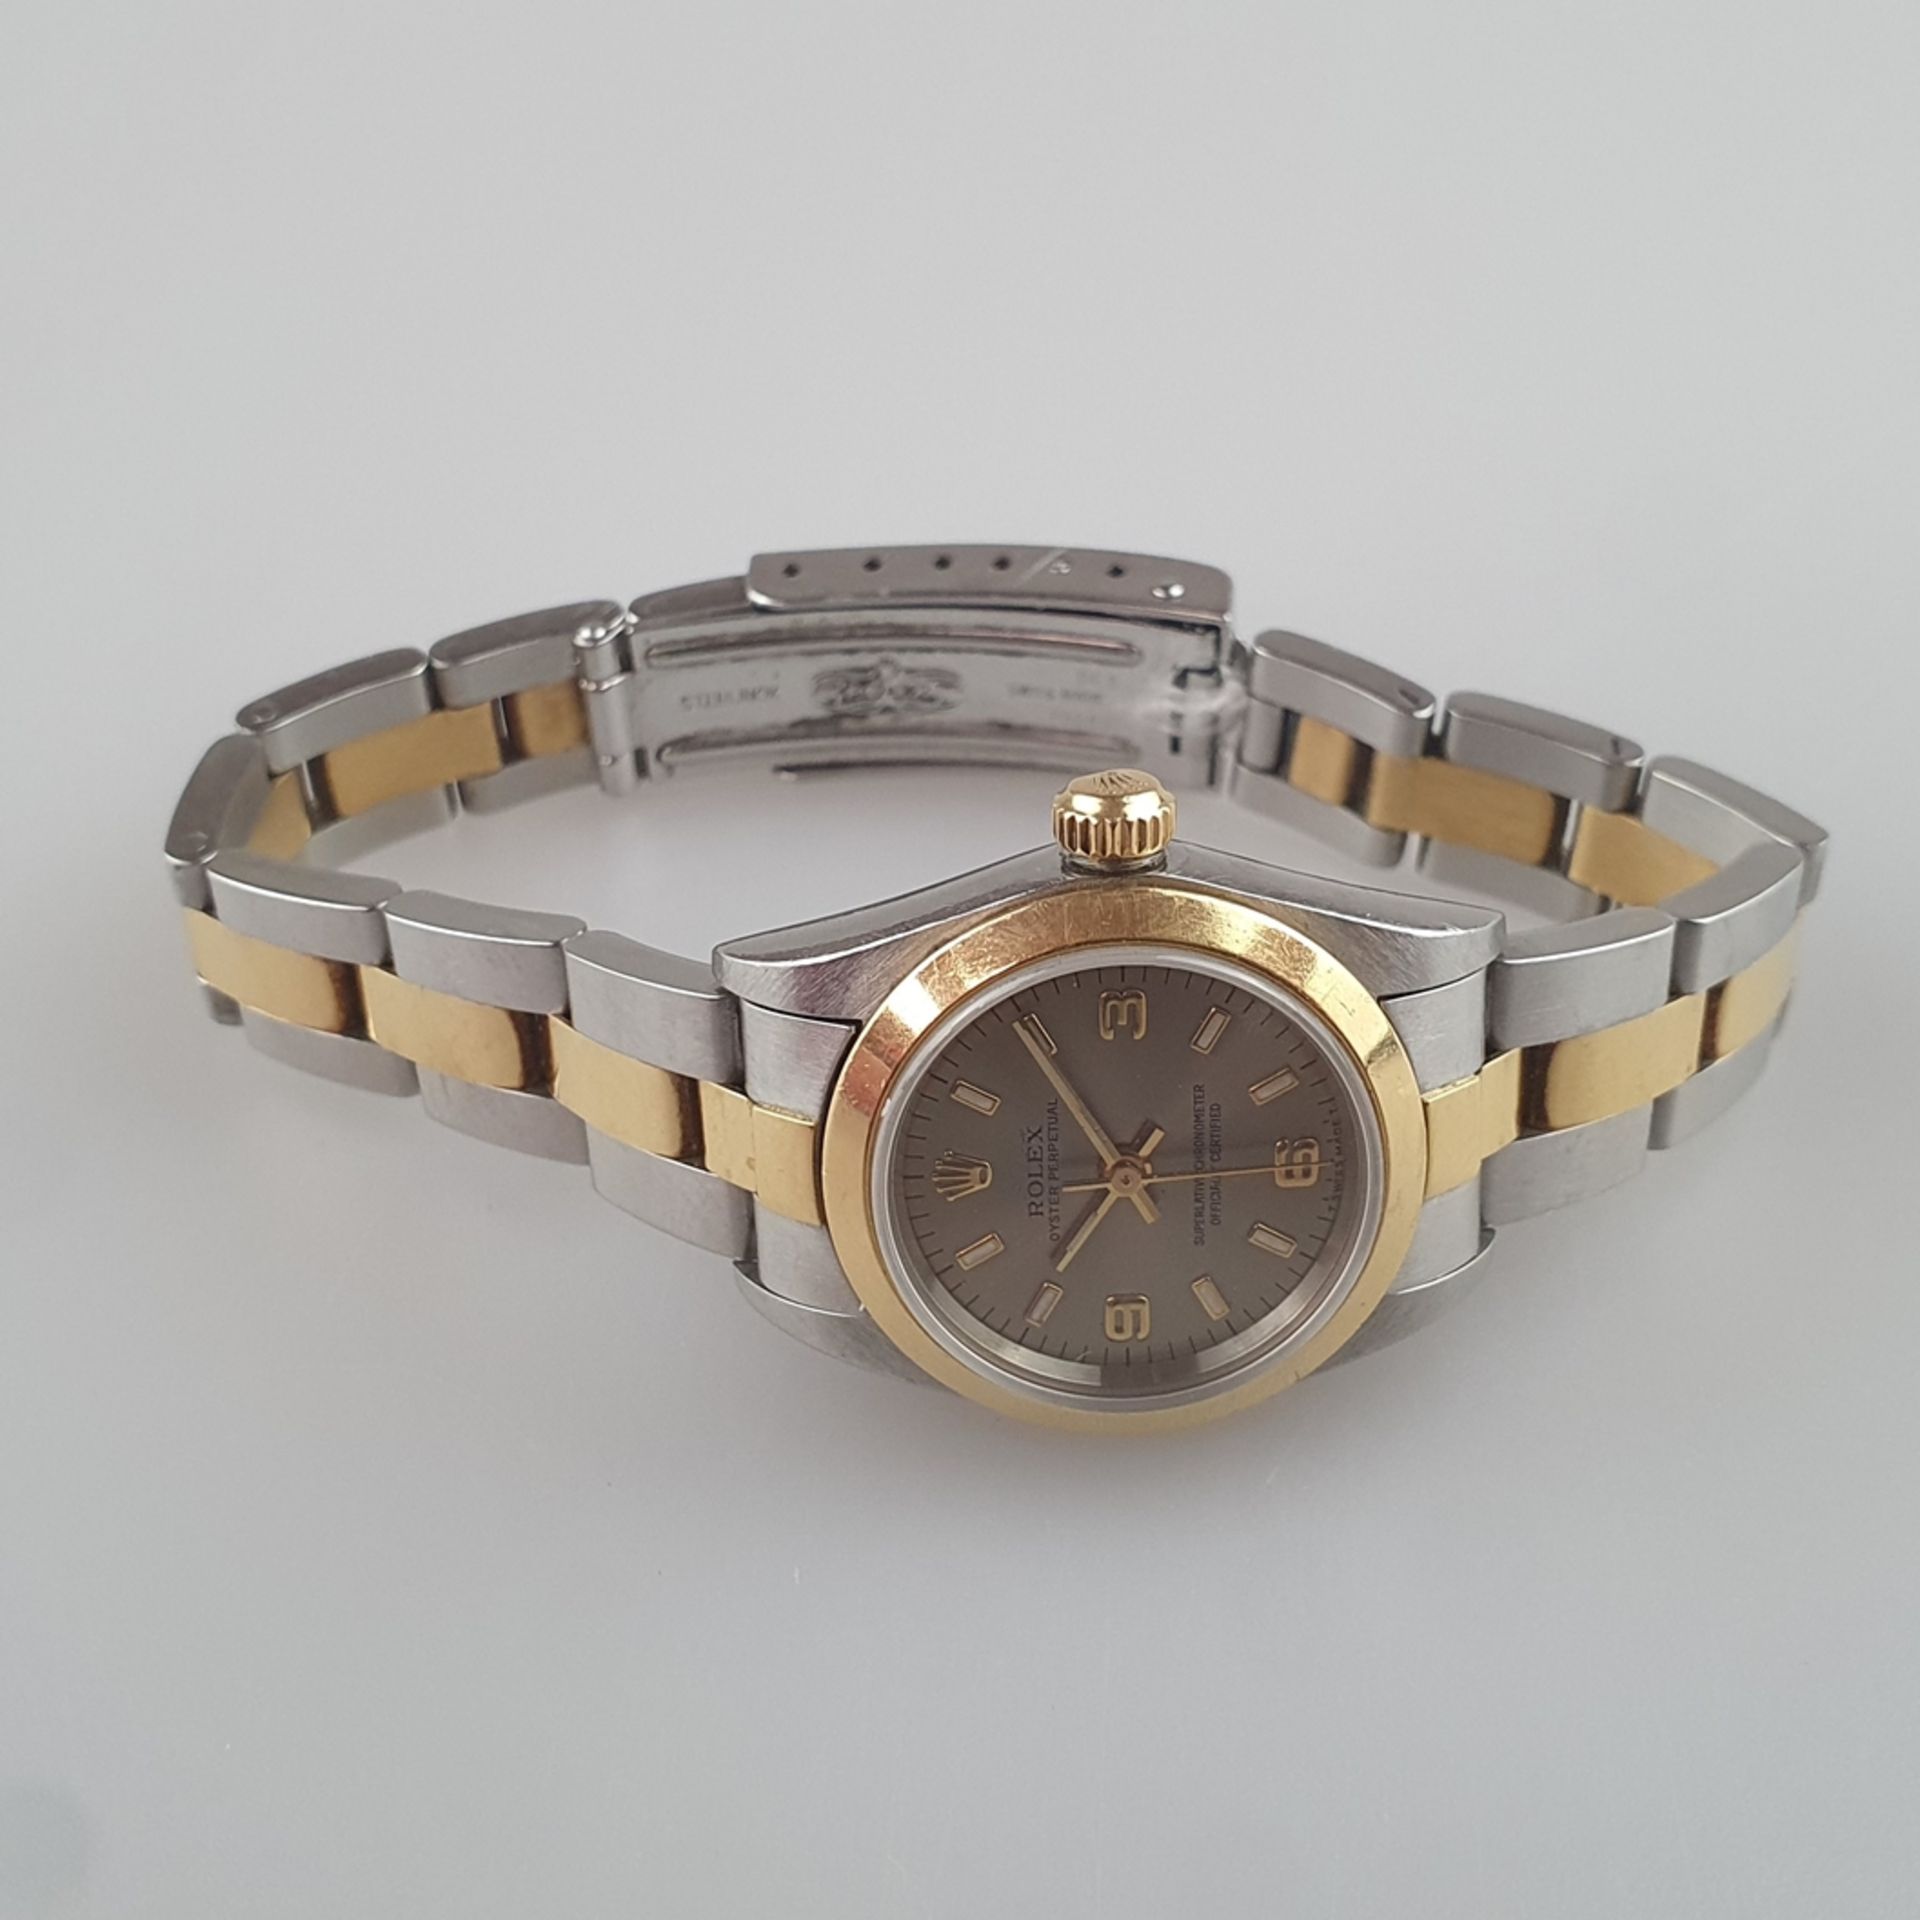 Rolex-Damenarmbanduhr - Oyster Perpetual, Datejust, bicolores Gehäuse und Armband aus 18K Gelbgold - Image 3 of 10